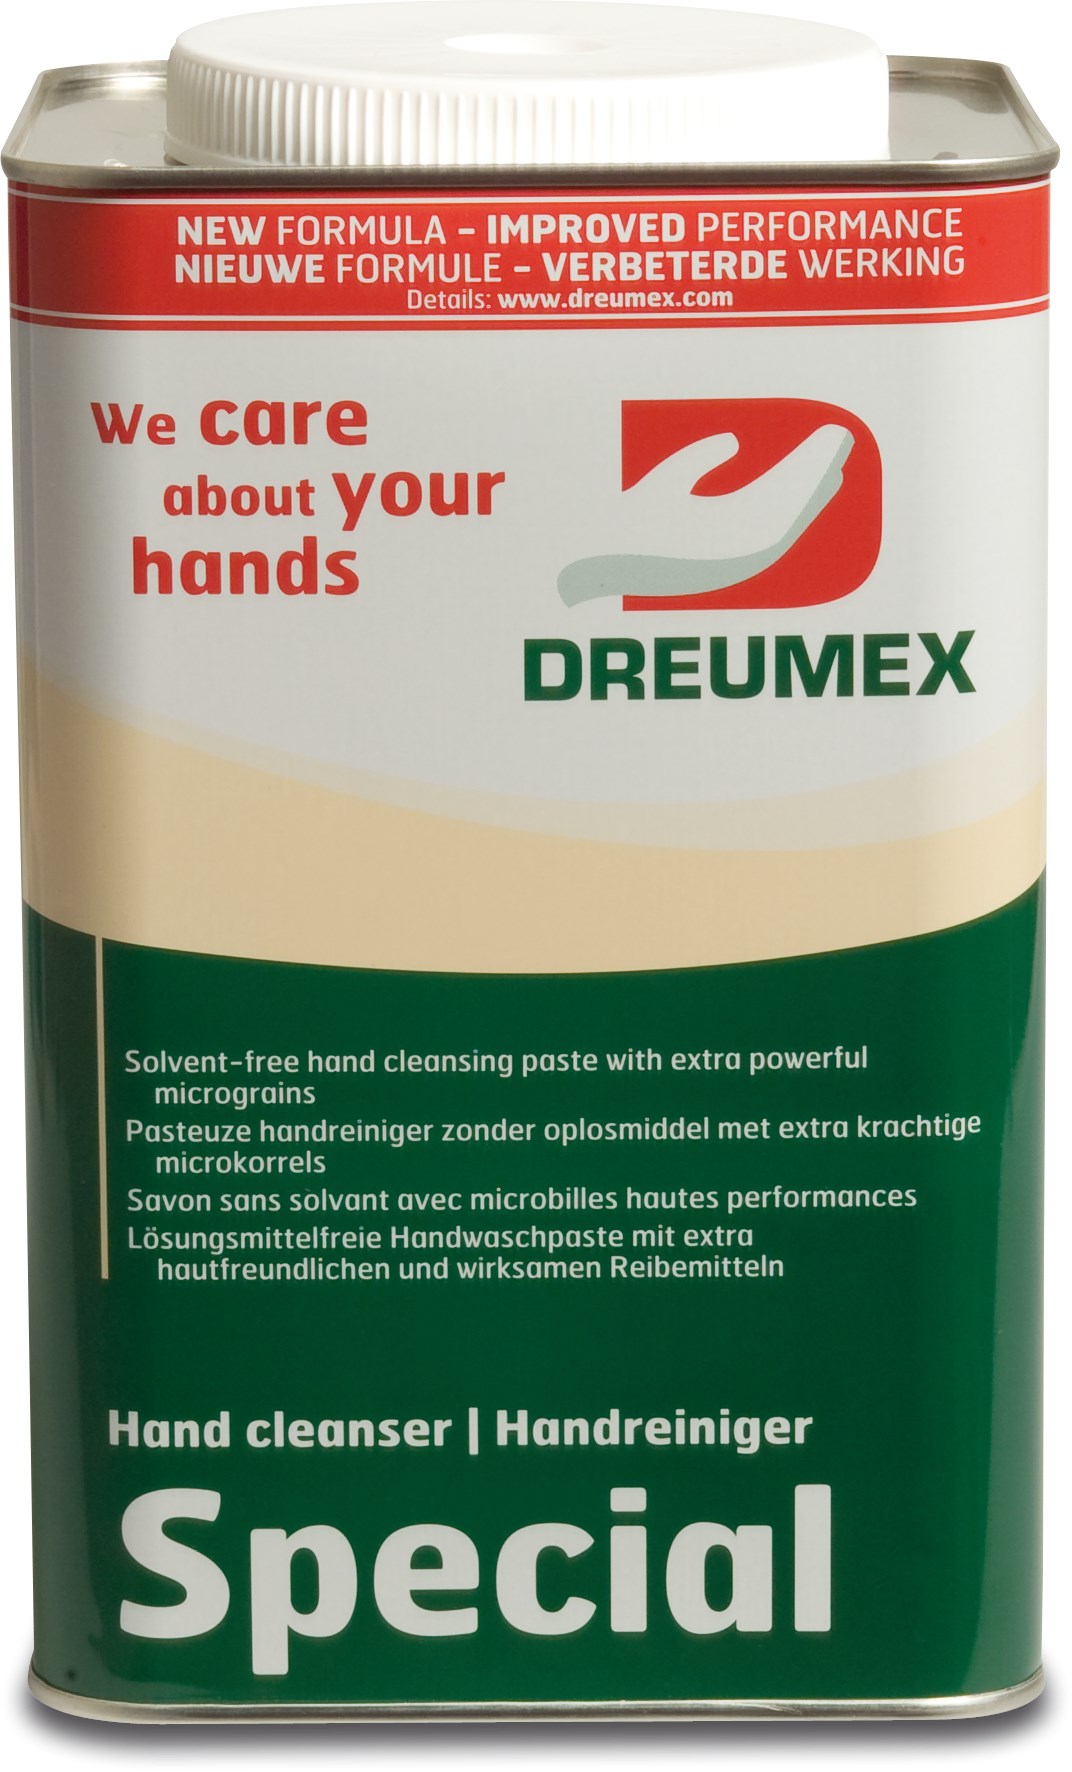 Dreumex Handreiniger crème type Special